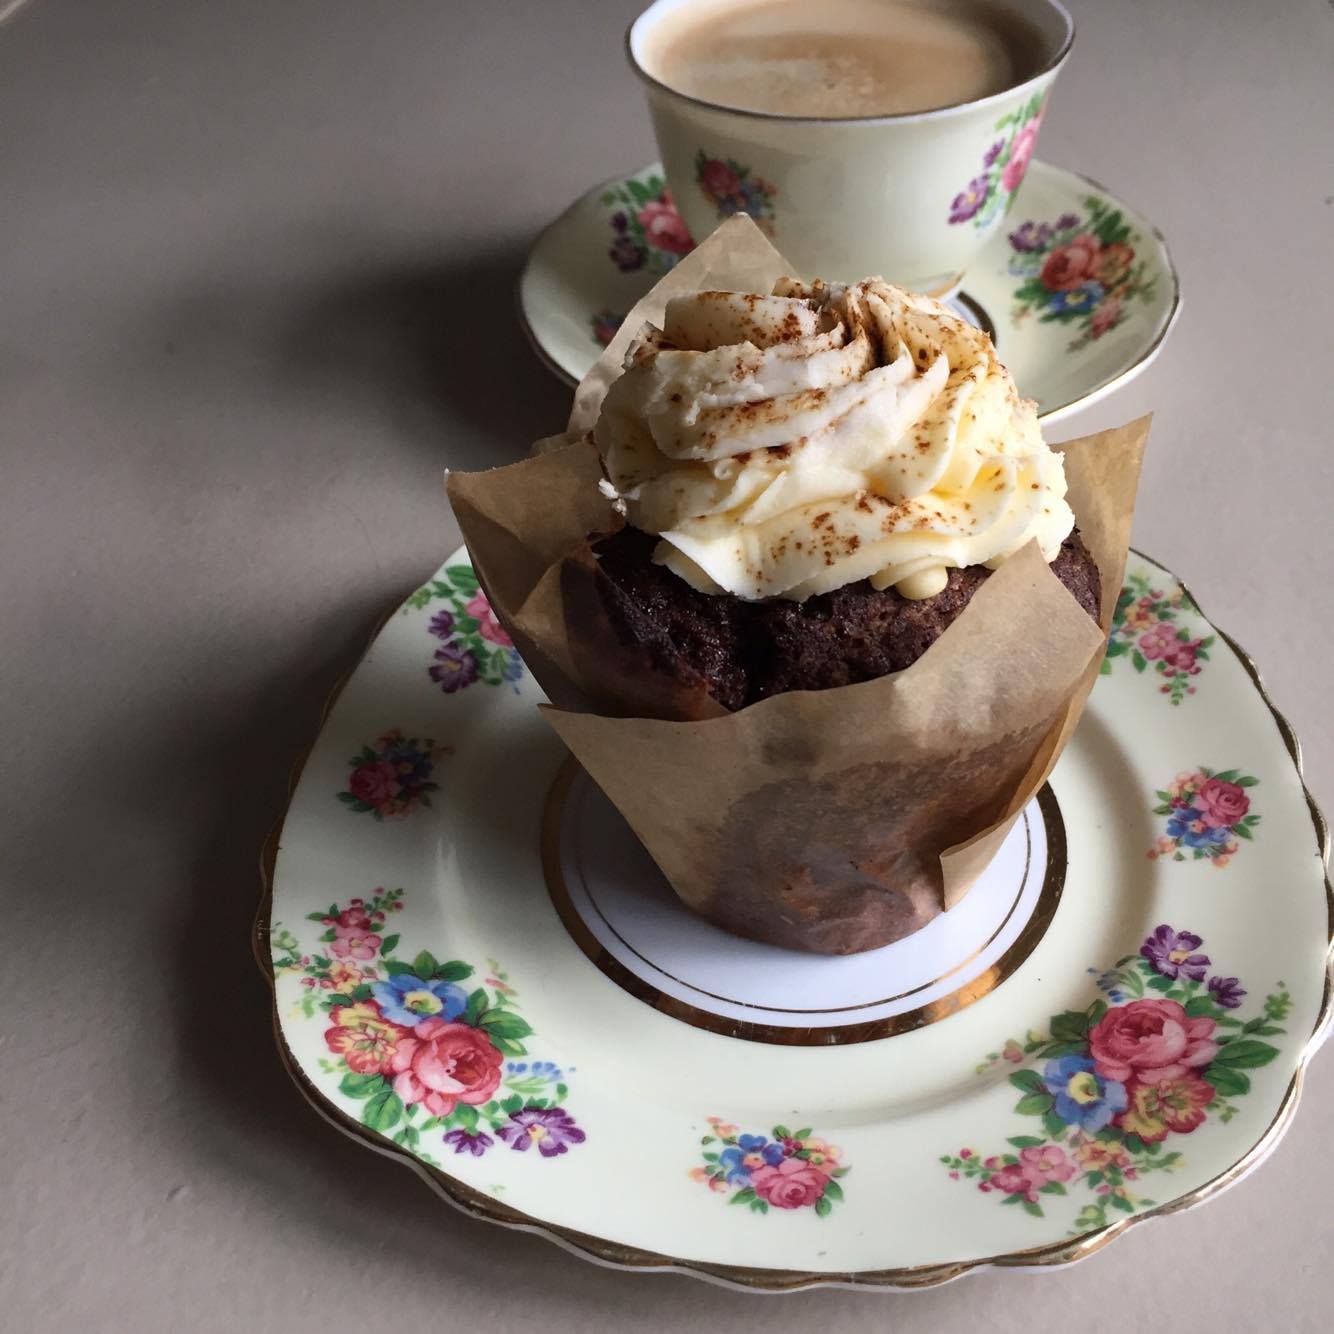 Gluten-free in Durham: Coeliac bakery of dreams